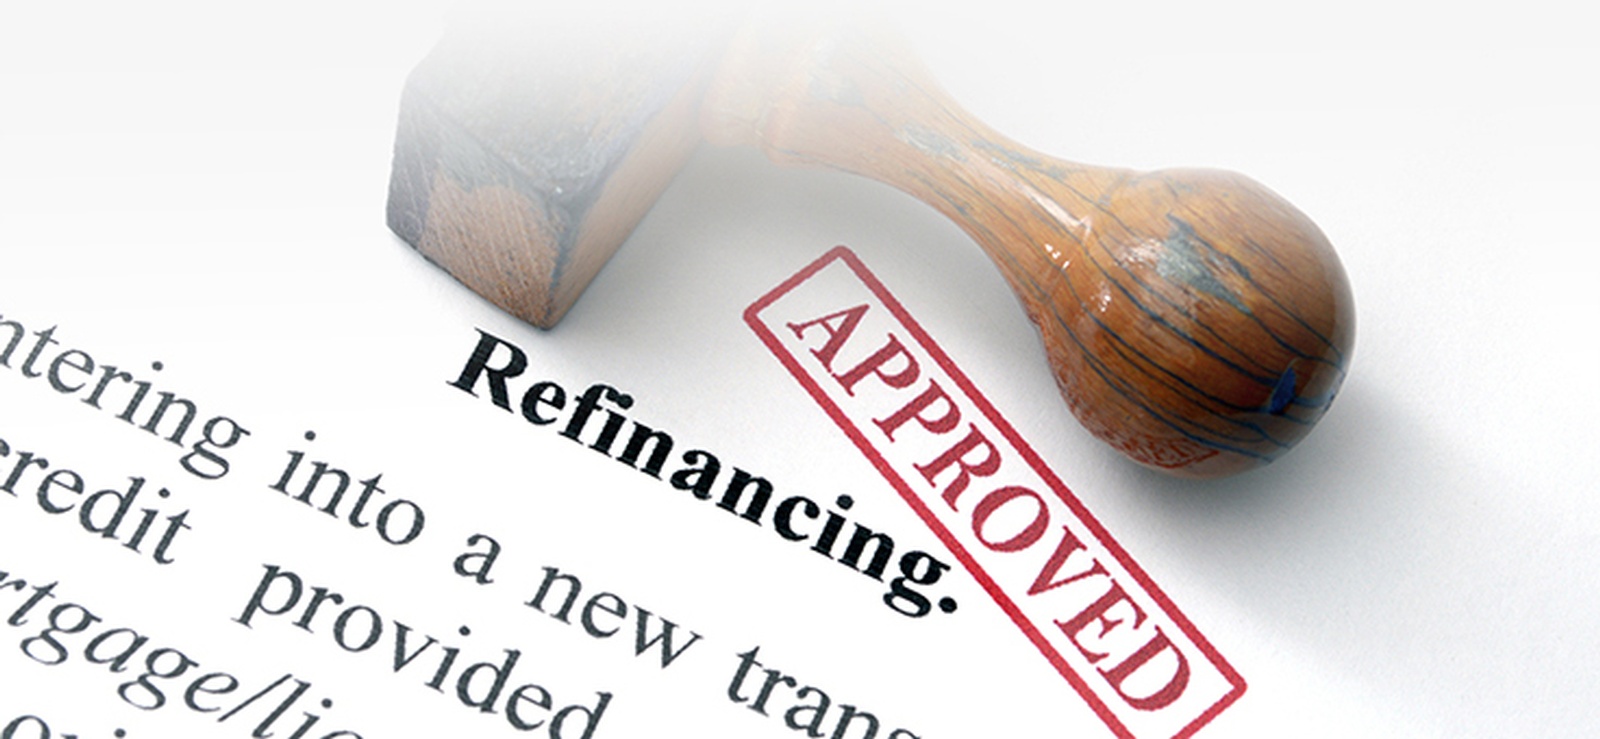 Refinance / Debt Consolidation Mortgage